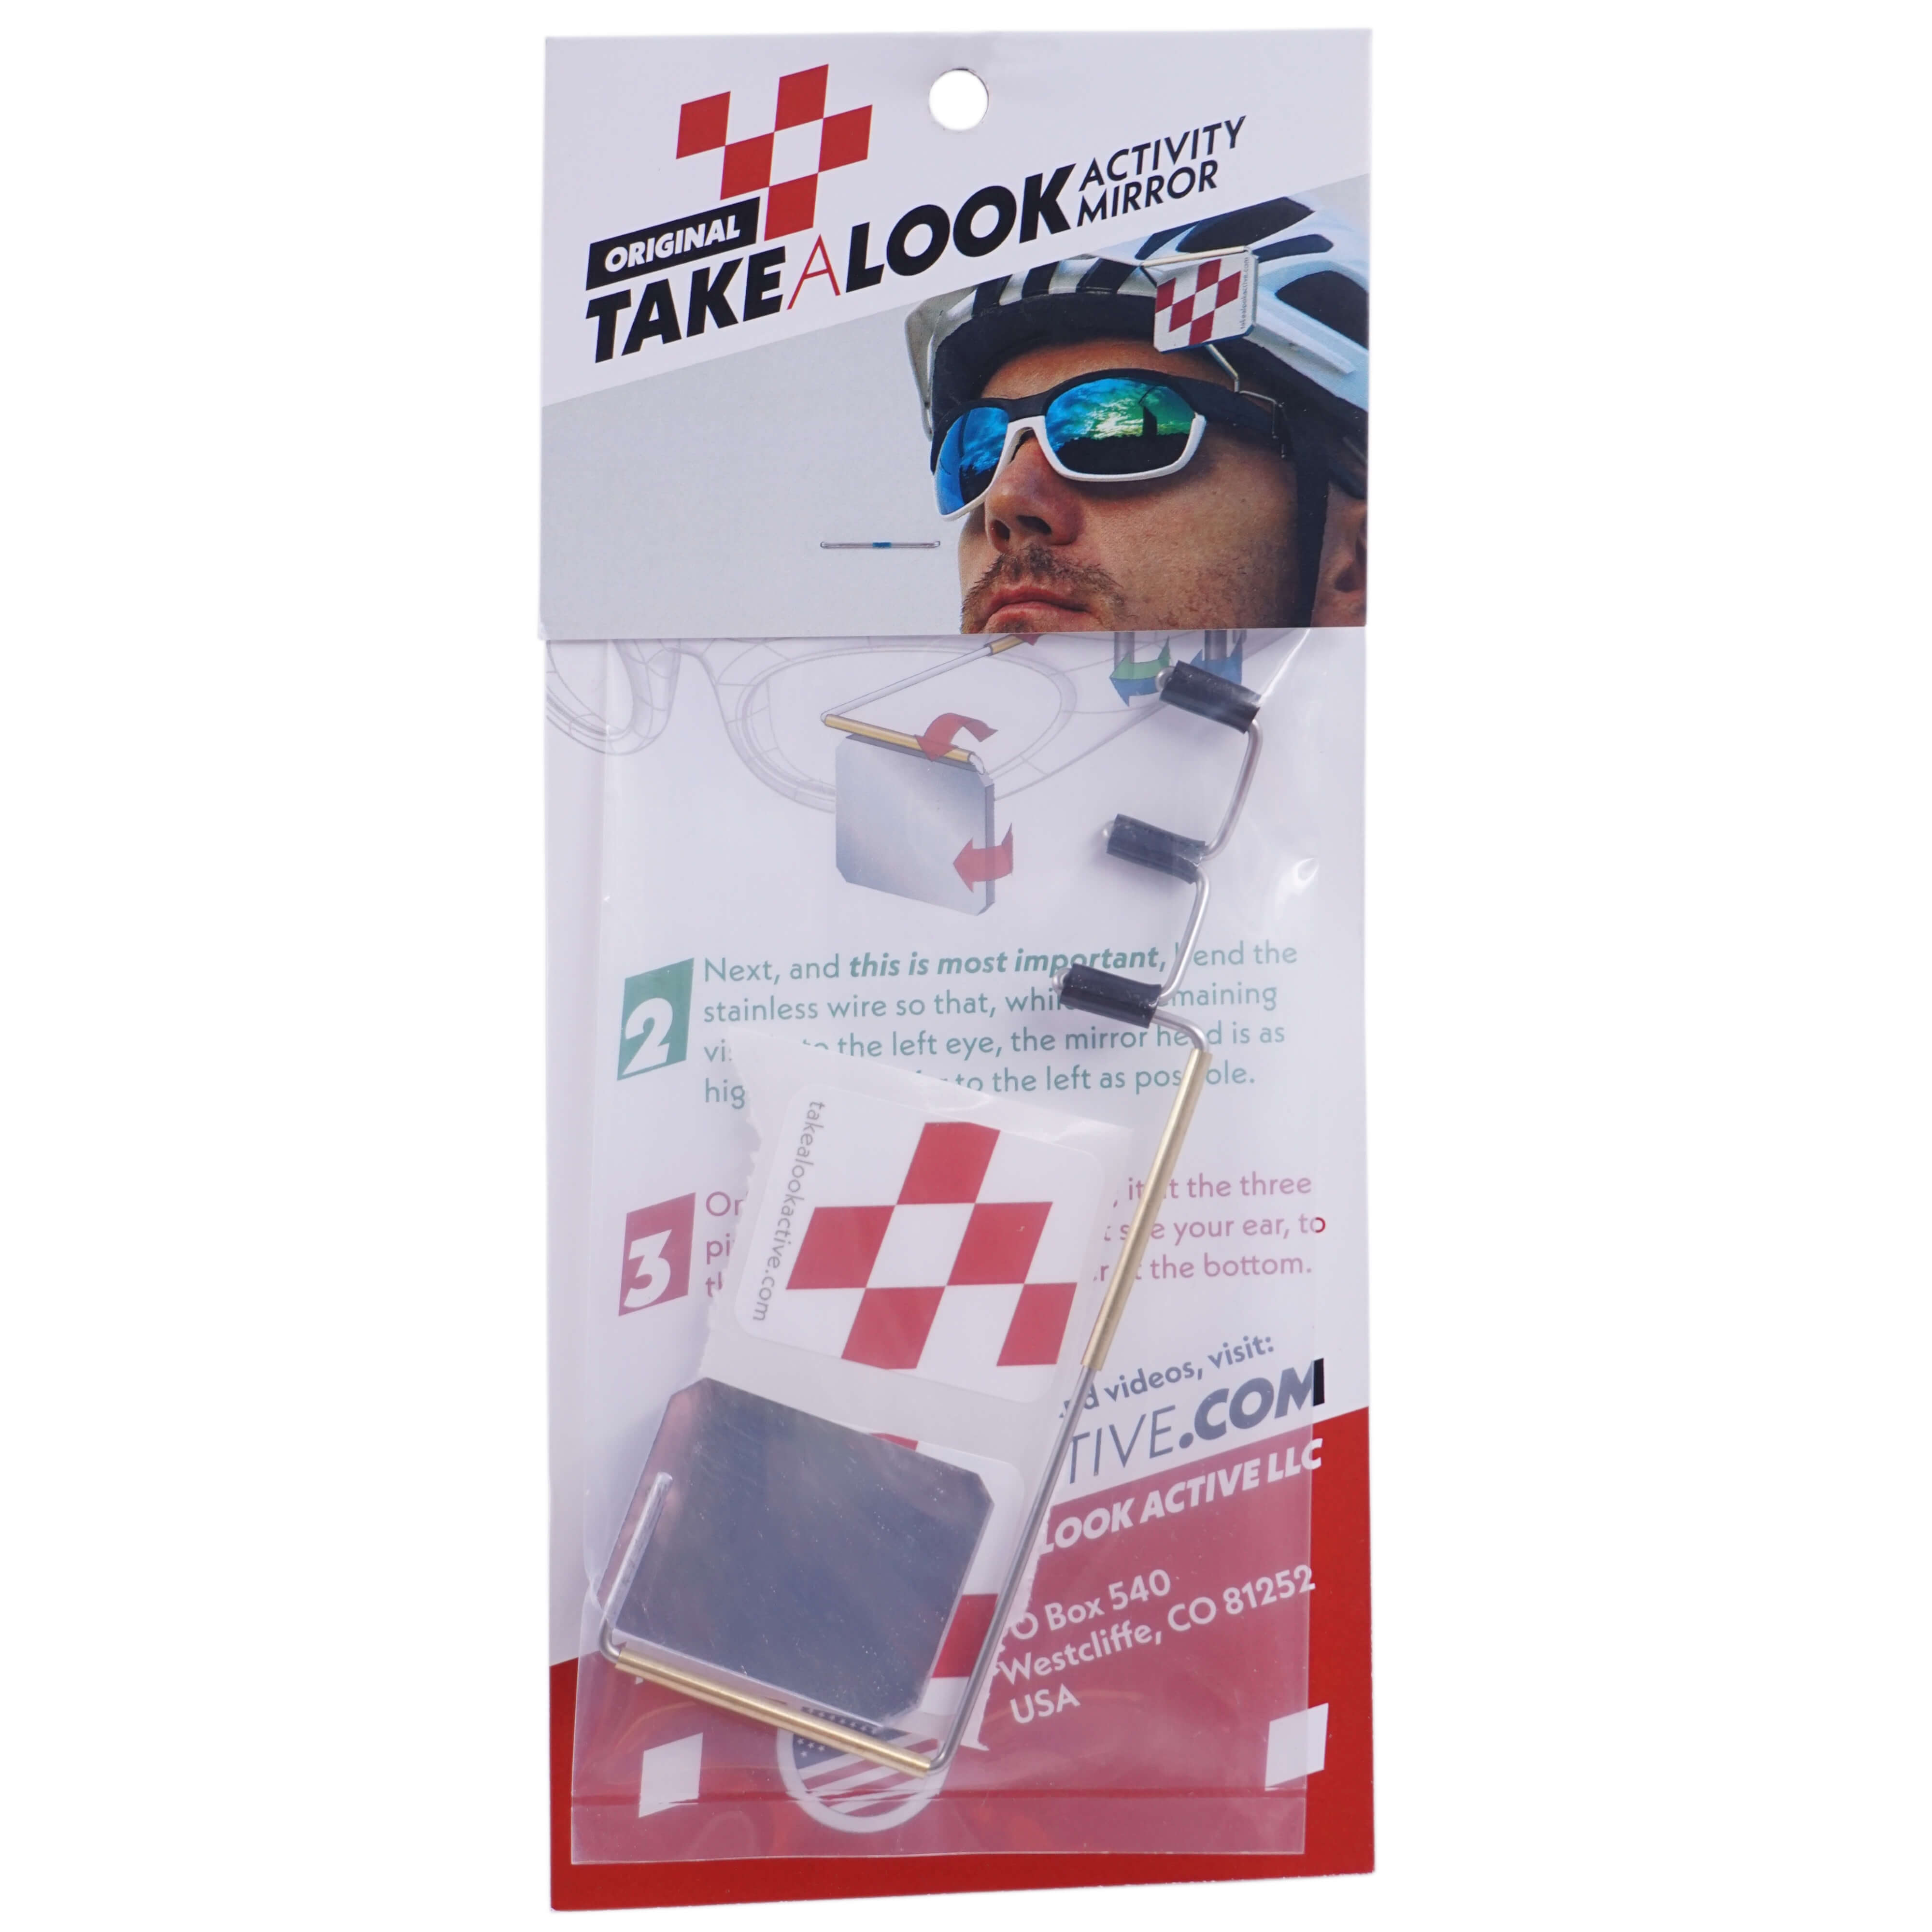 Take-a-Look Compact Version Visor Mount Eyeglass Mirror - The Bikesmiths